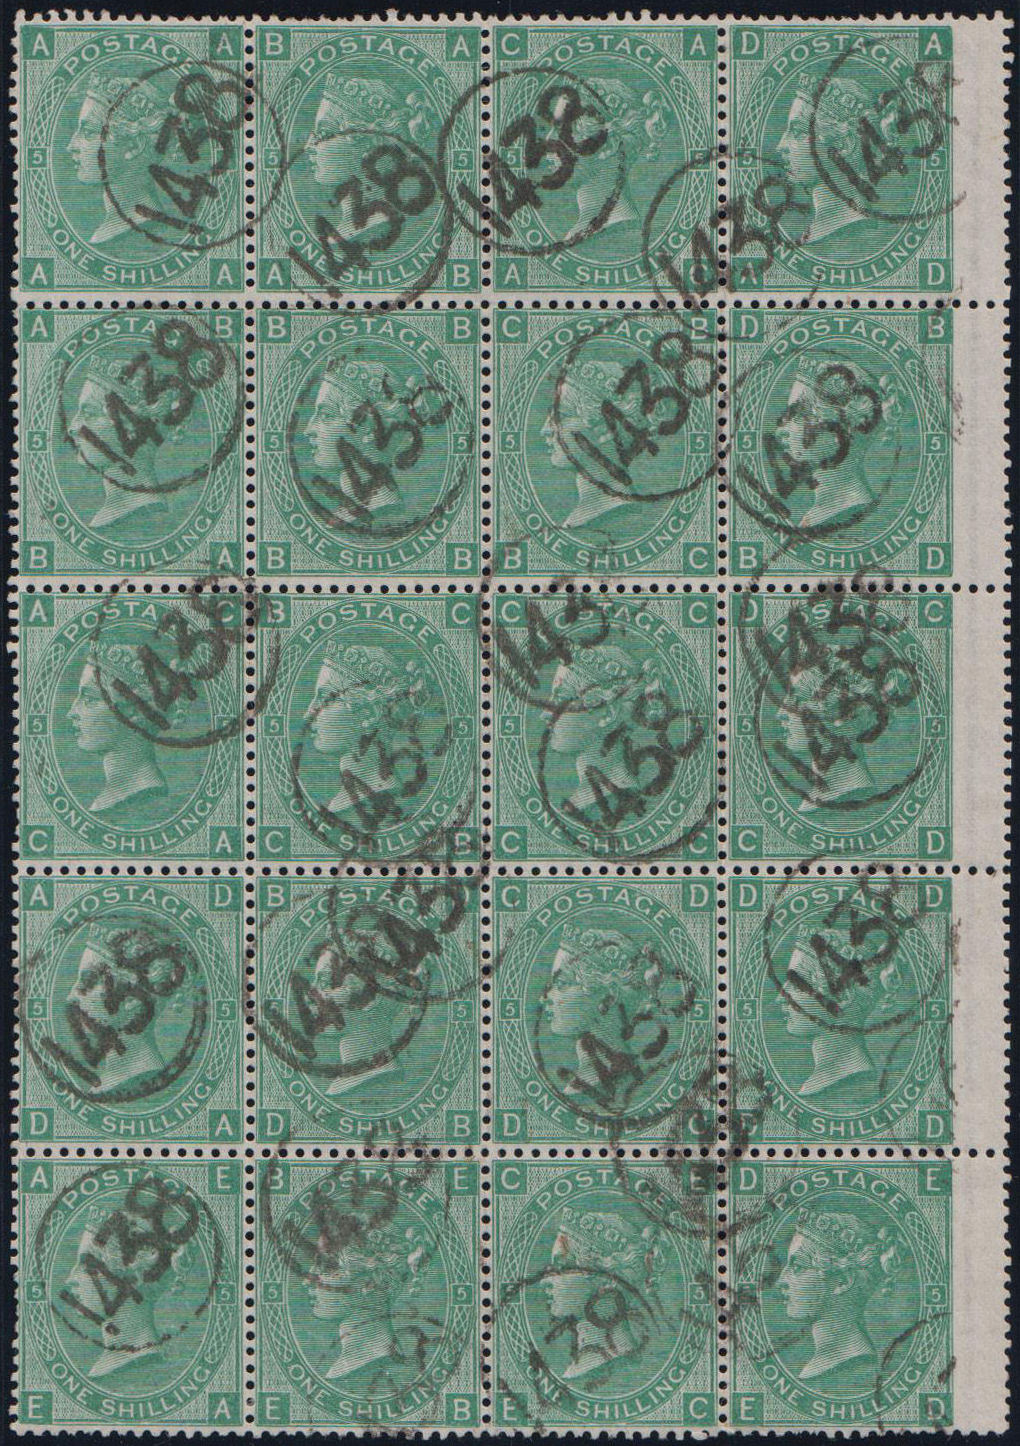 Railway Telegraph cancel 1438, Victoria (LB & SC) on 4 x 6d stamps